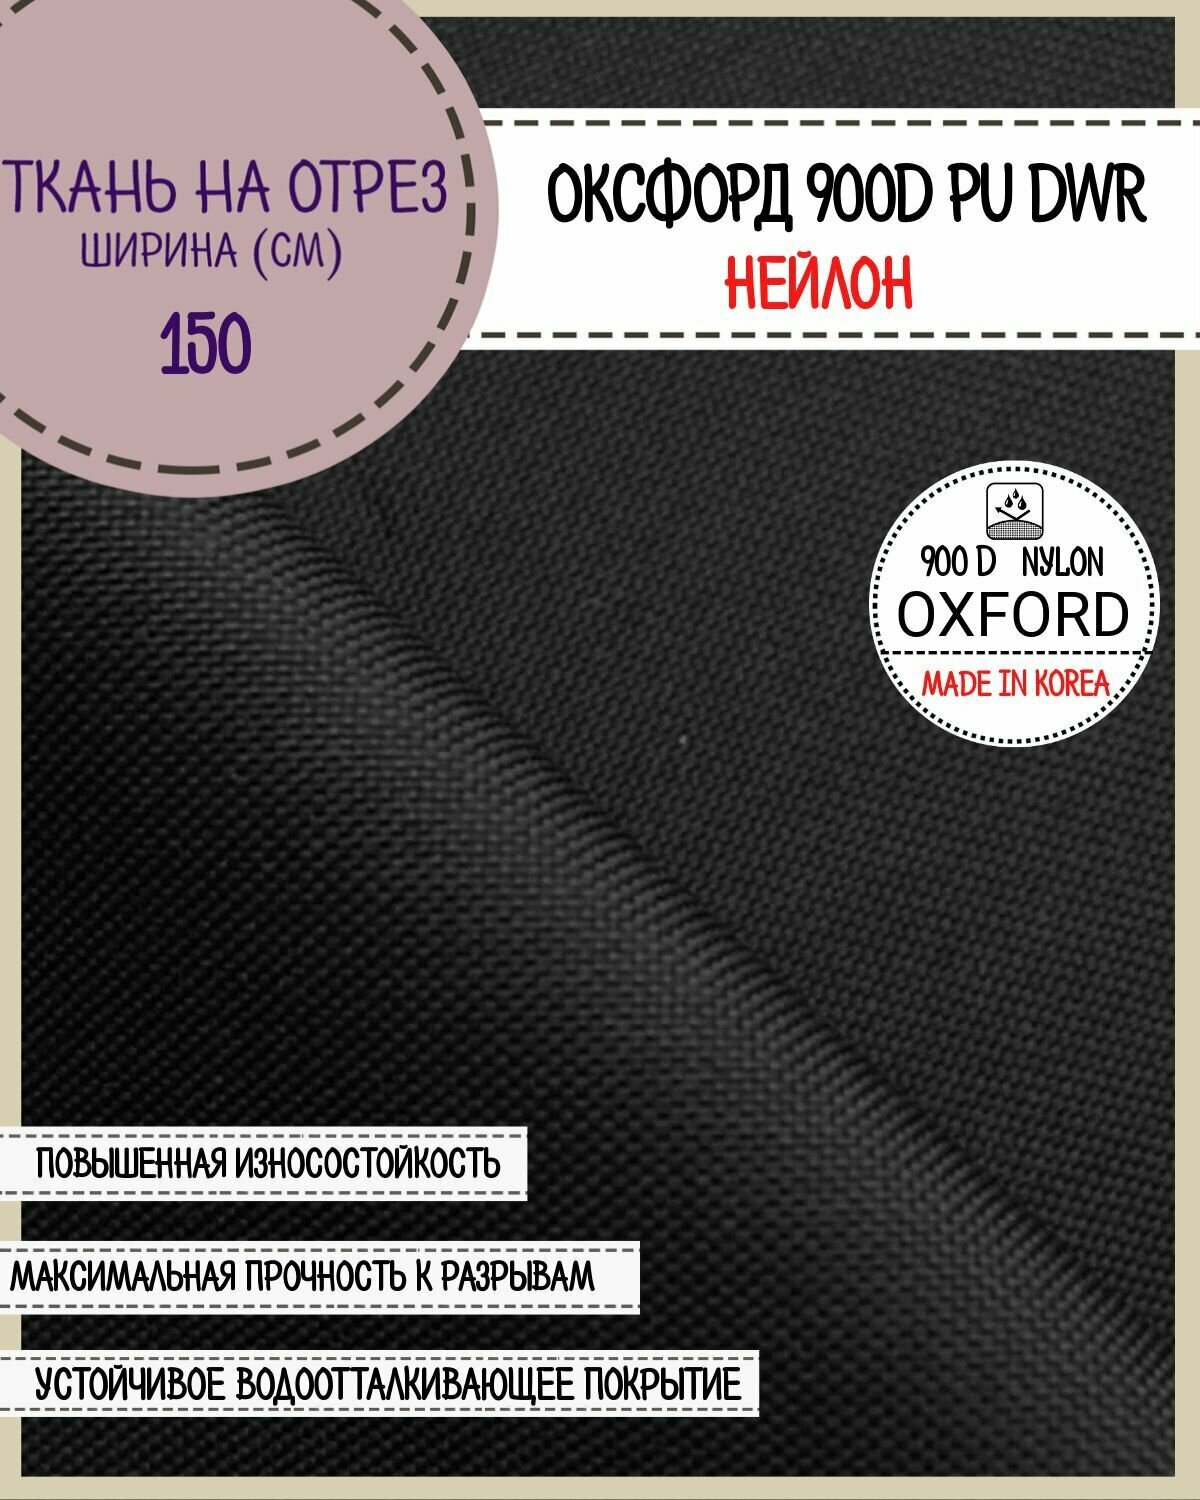 Ткань Оксфорд/Oxford нейлон 900D PU/Южная Корея, пропитка водоотталкивающая, цв. черный, ш-150 см, на отрез, цена за пог. метр